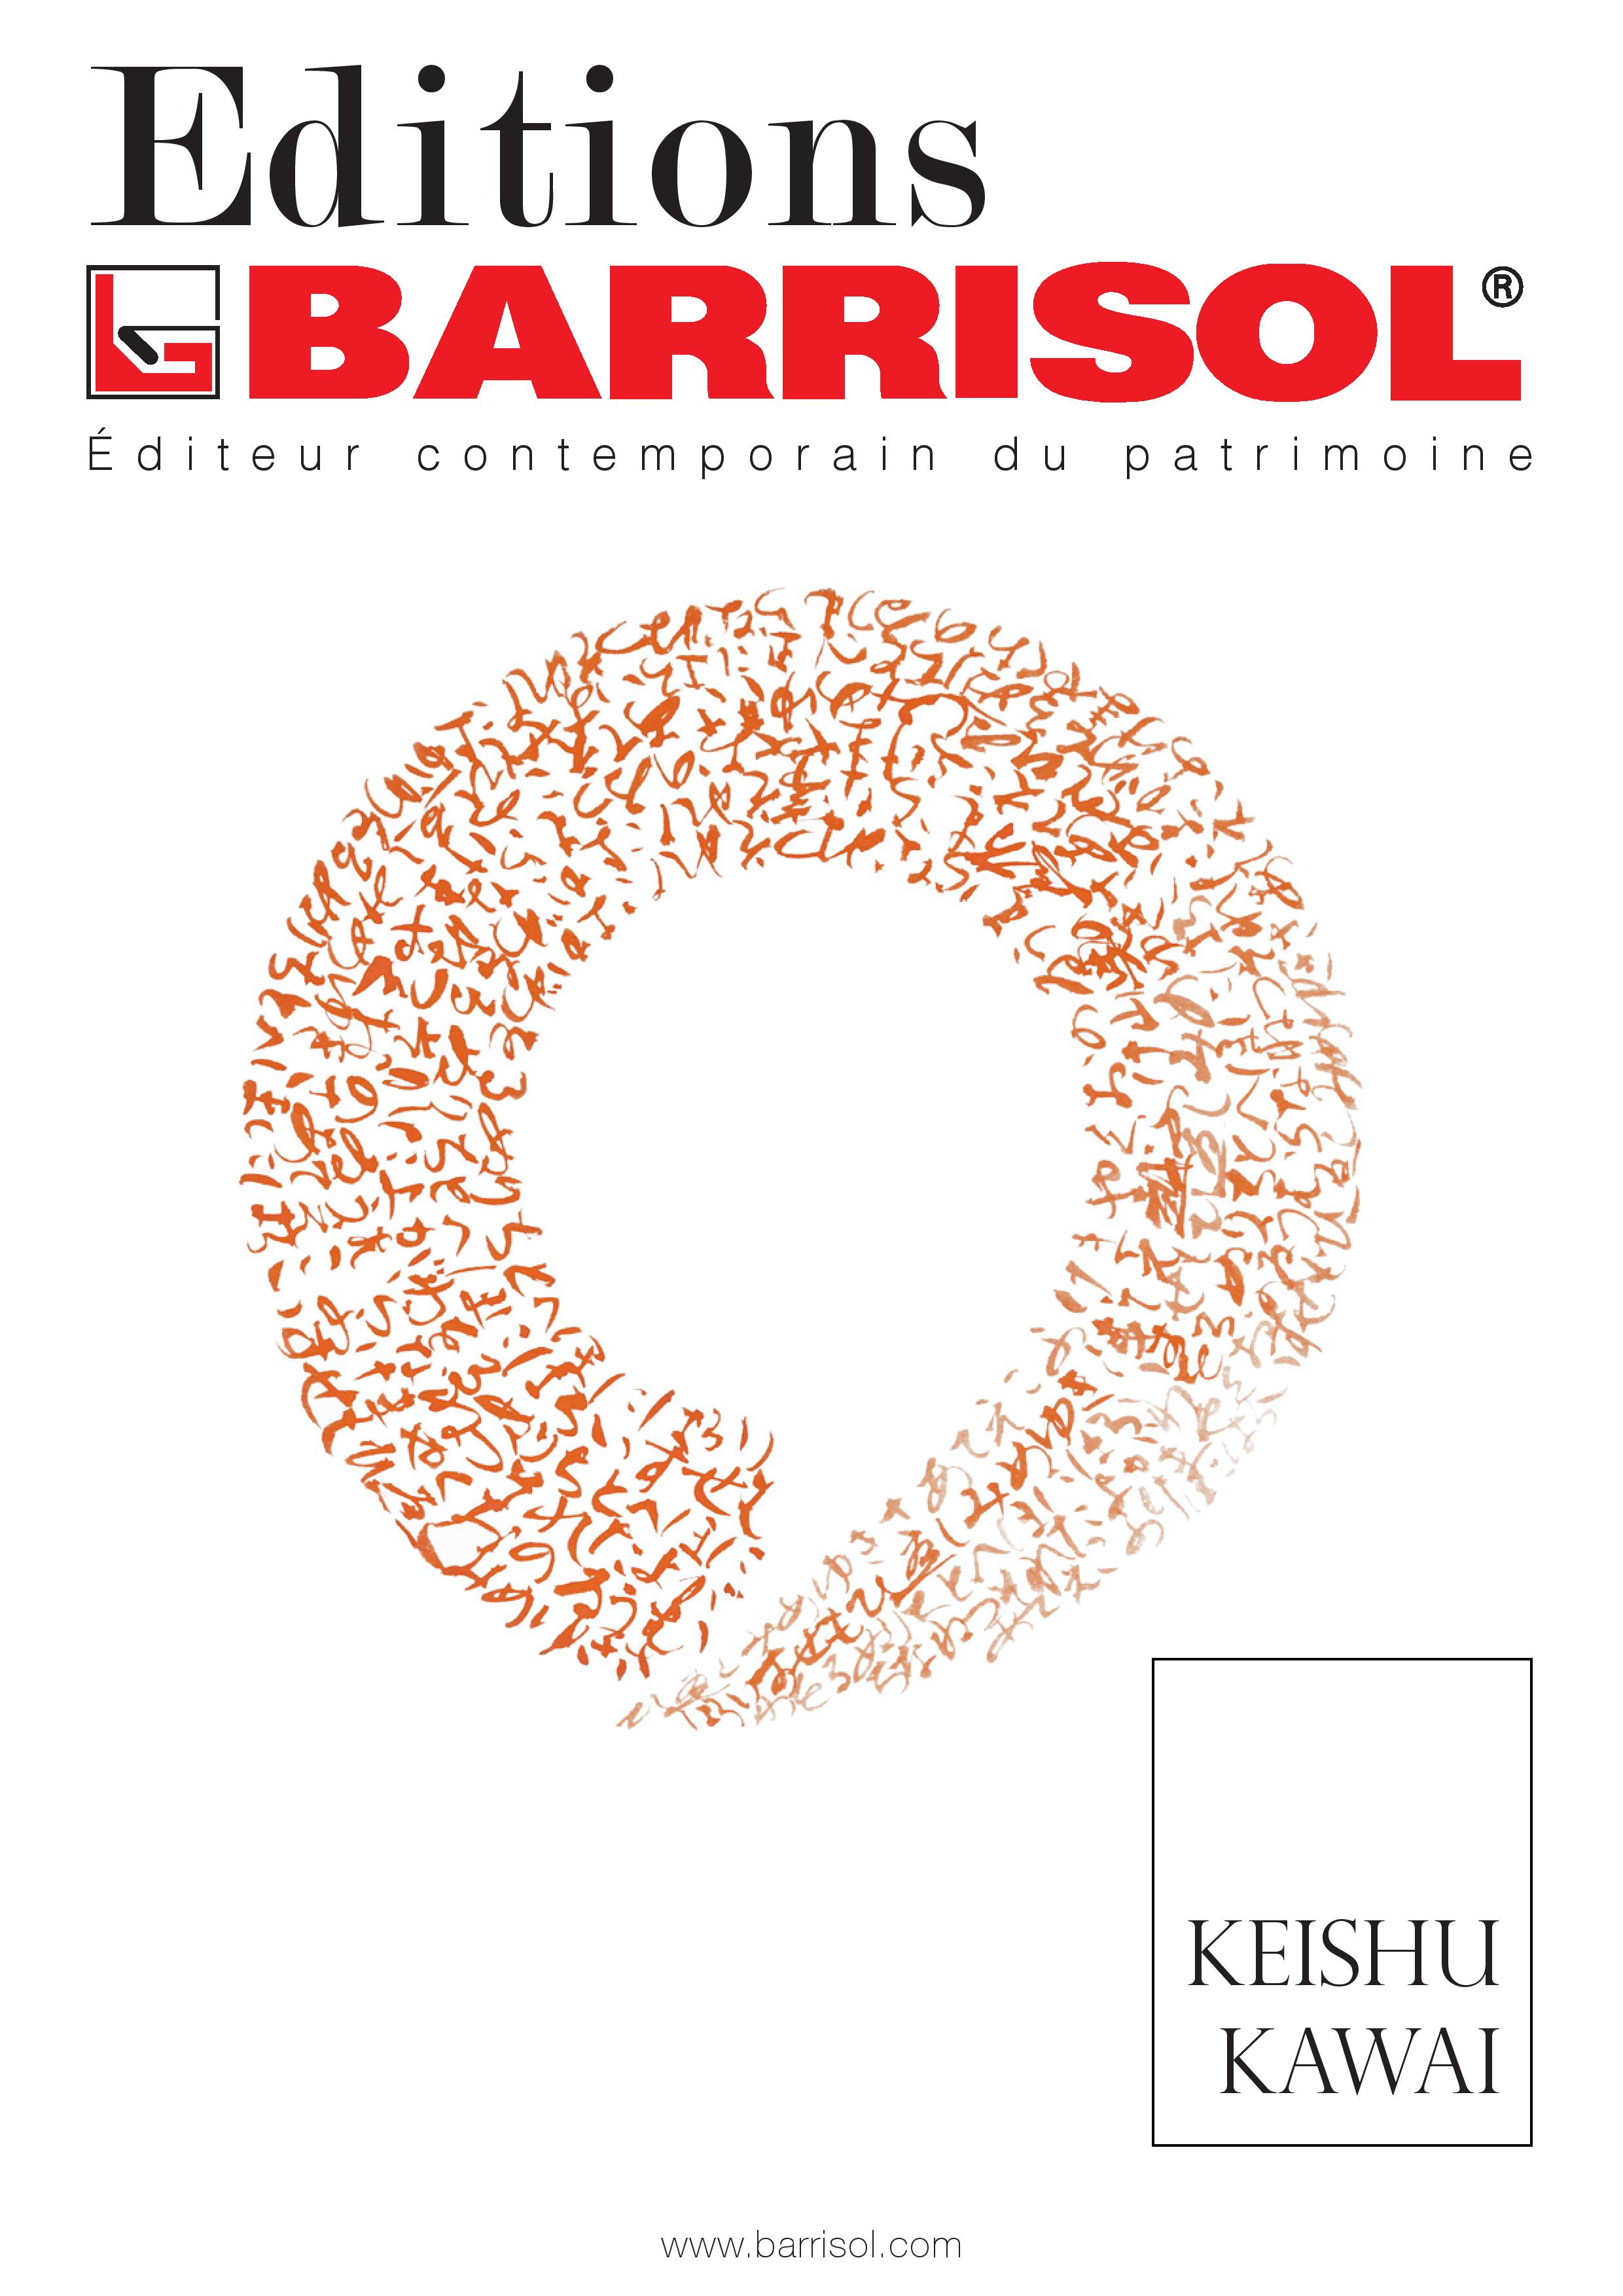 Editions BARRISOL - Catalogue Keishu Kawai